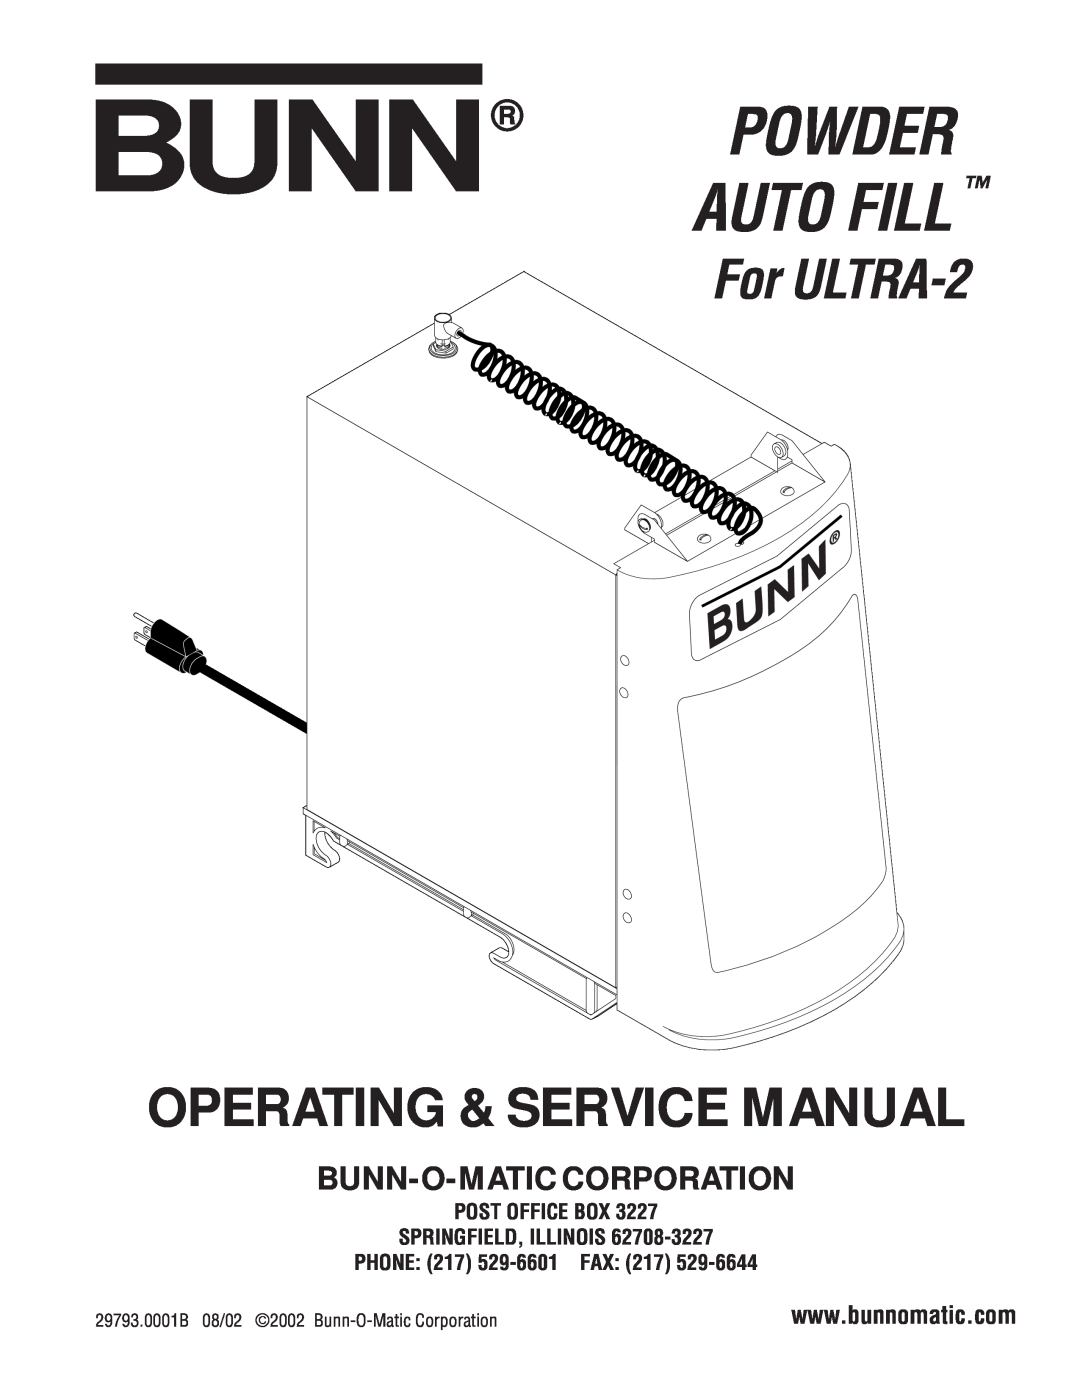 Bunn dispenser service manual POST OFFICE BOX SPRINGFIELD, ILLINOIS PHONE 217 529-6601 FAX, Bunn Powder Auto Fill 